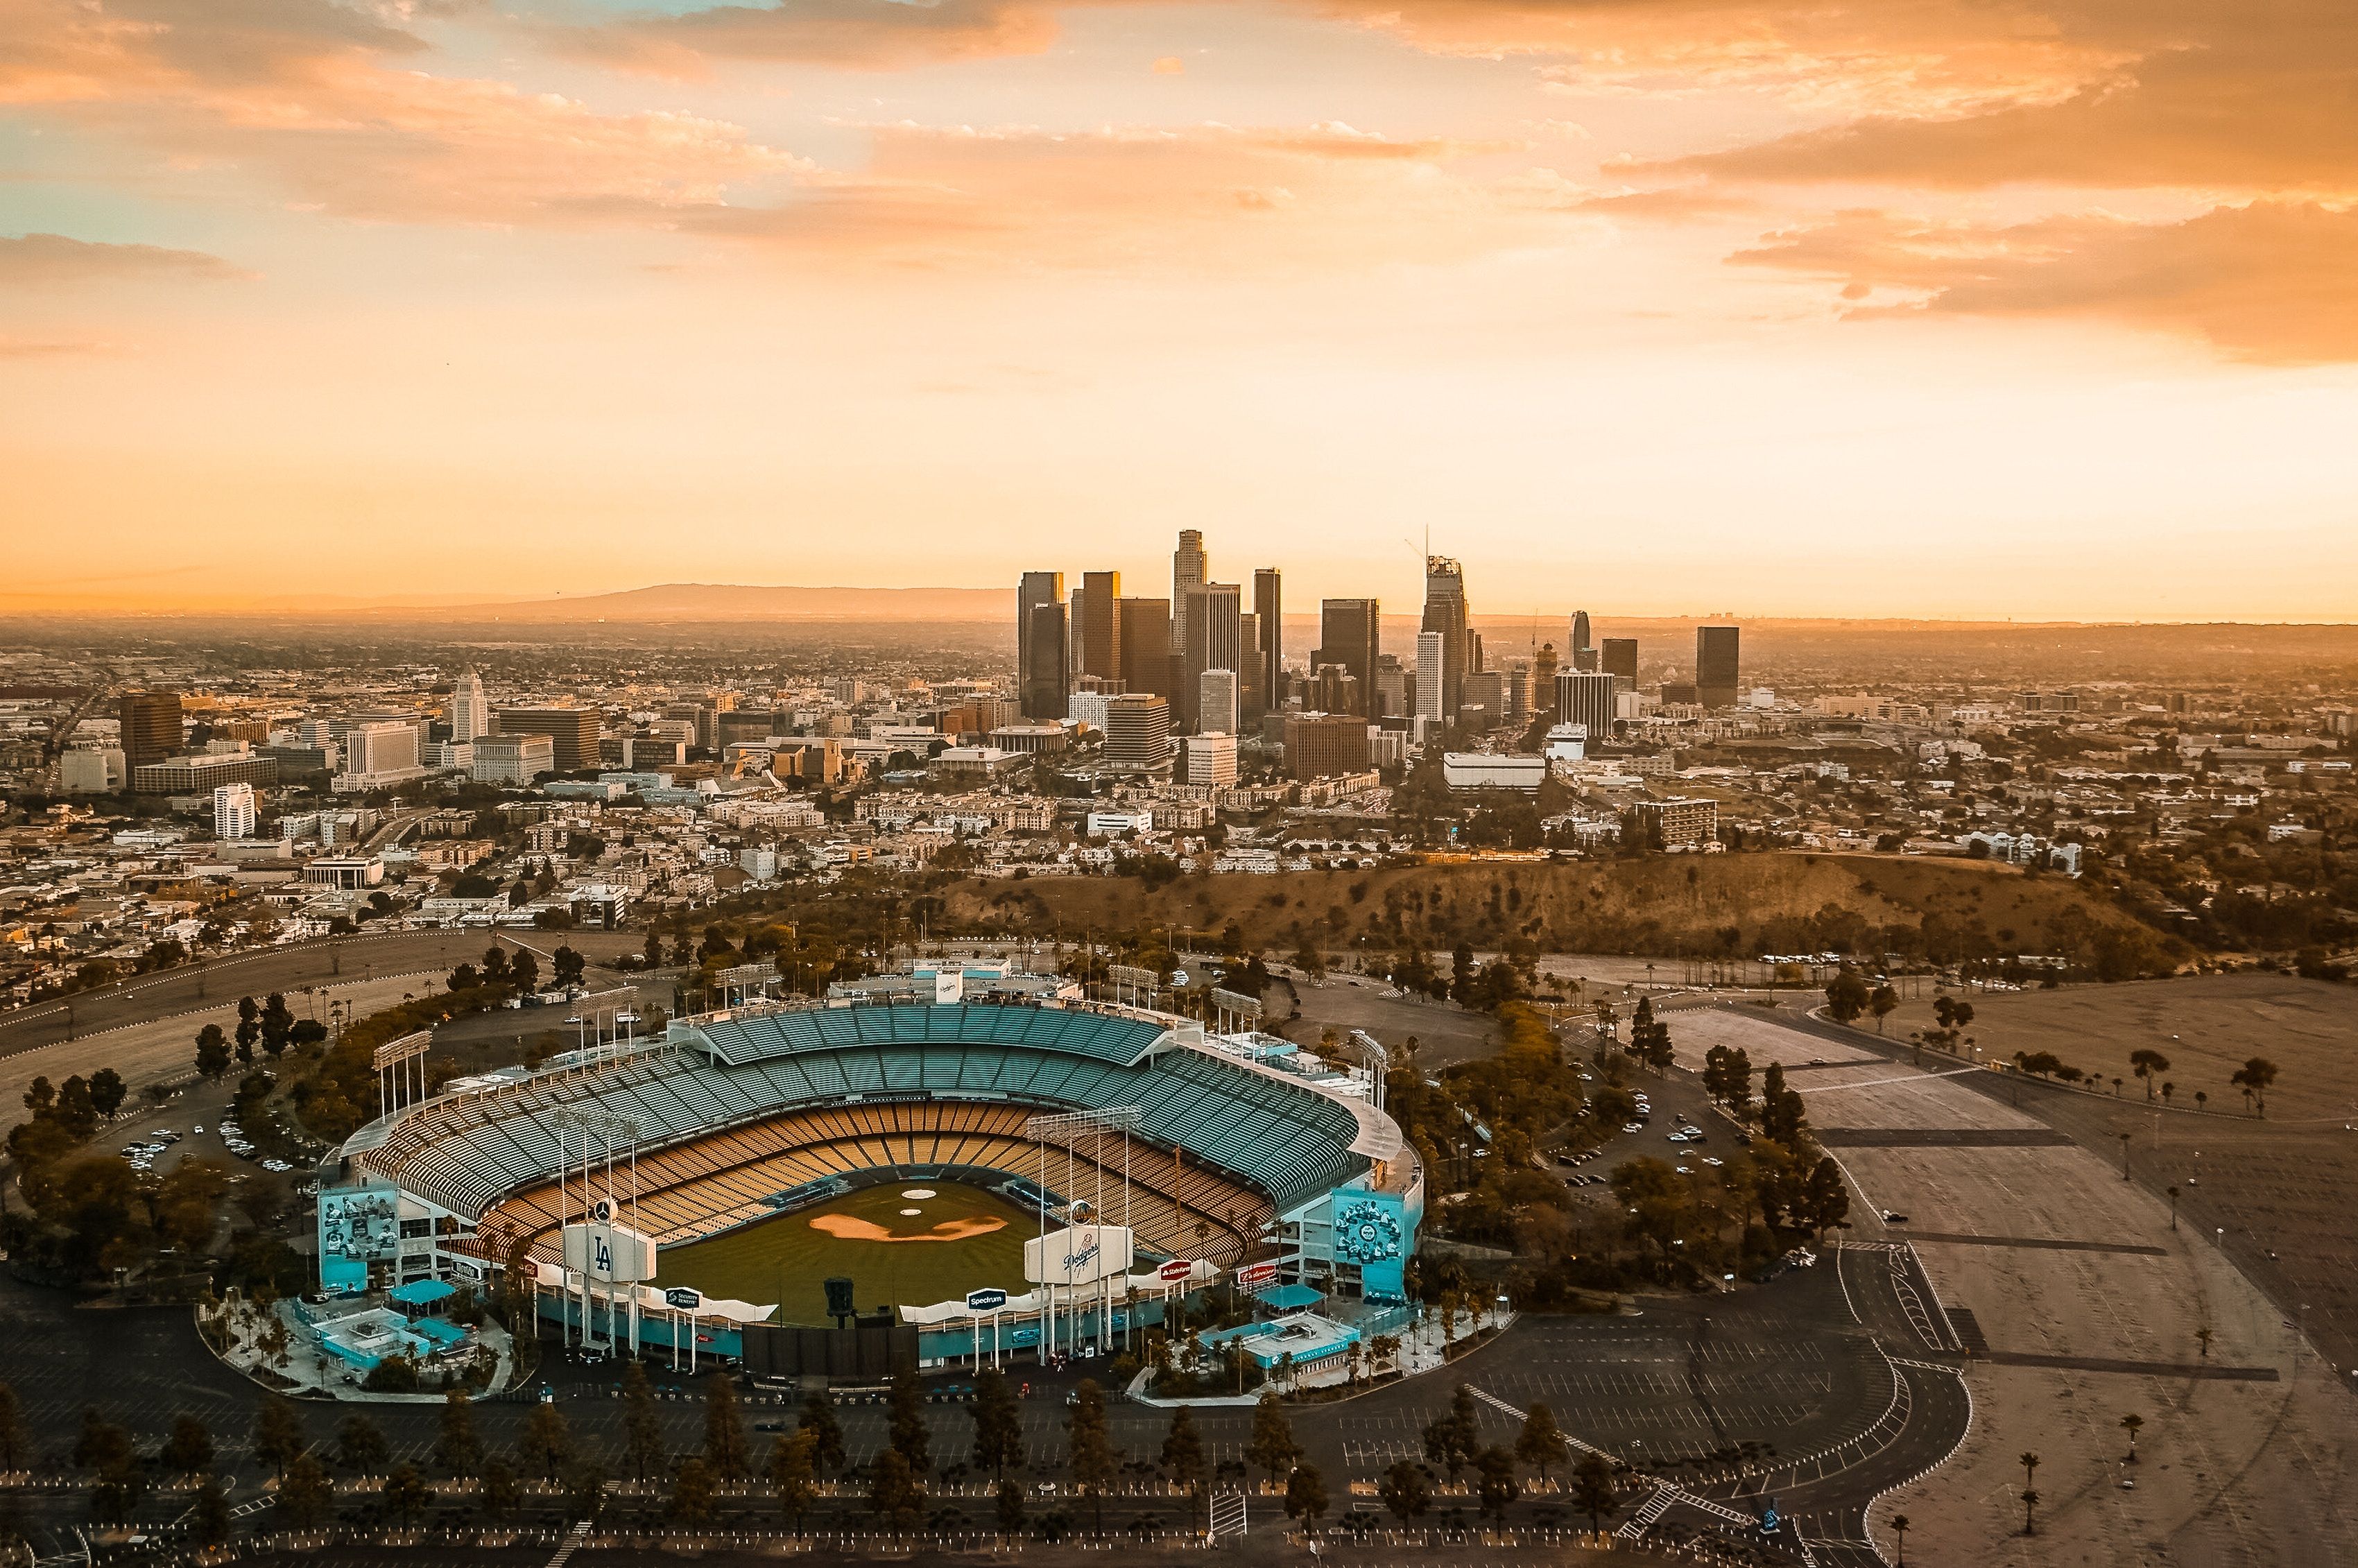 Los Angeles Dodgers Stadium Wallpaper